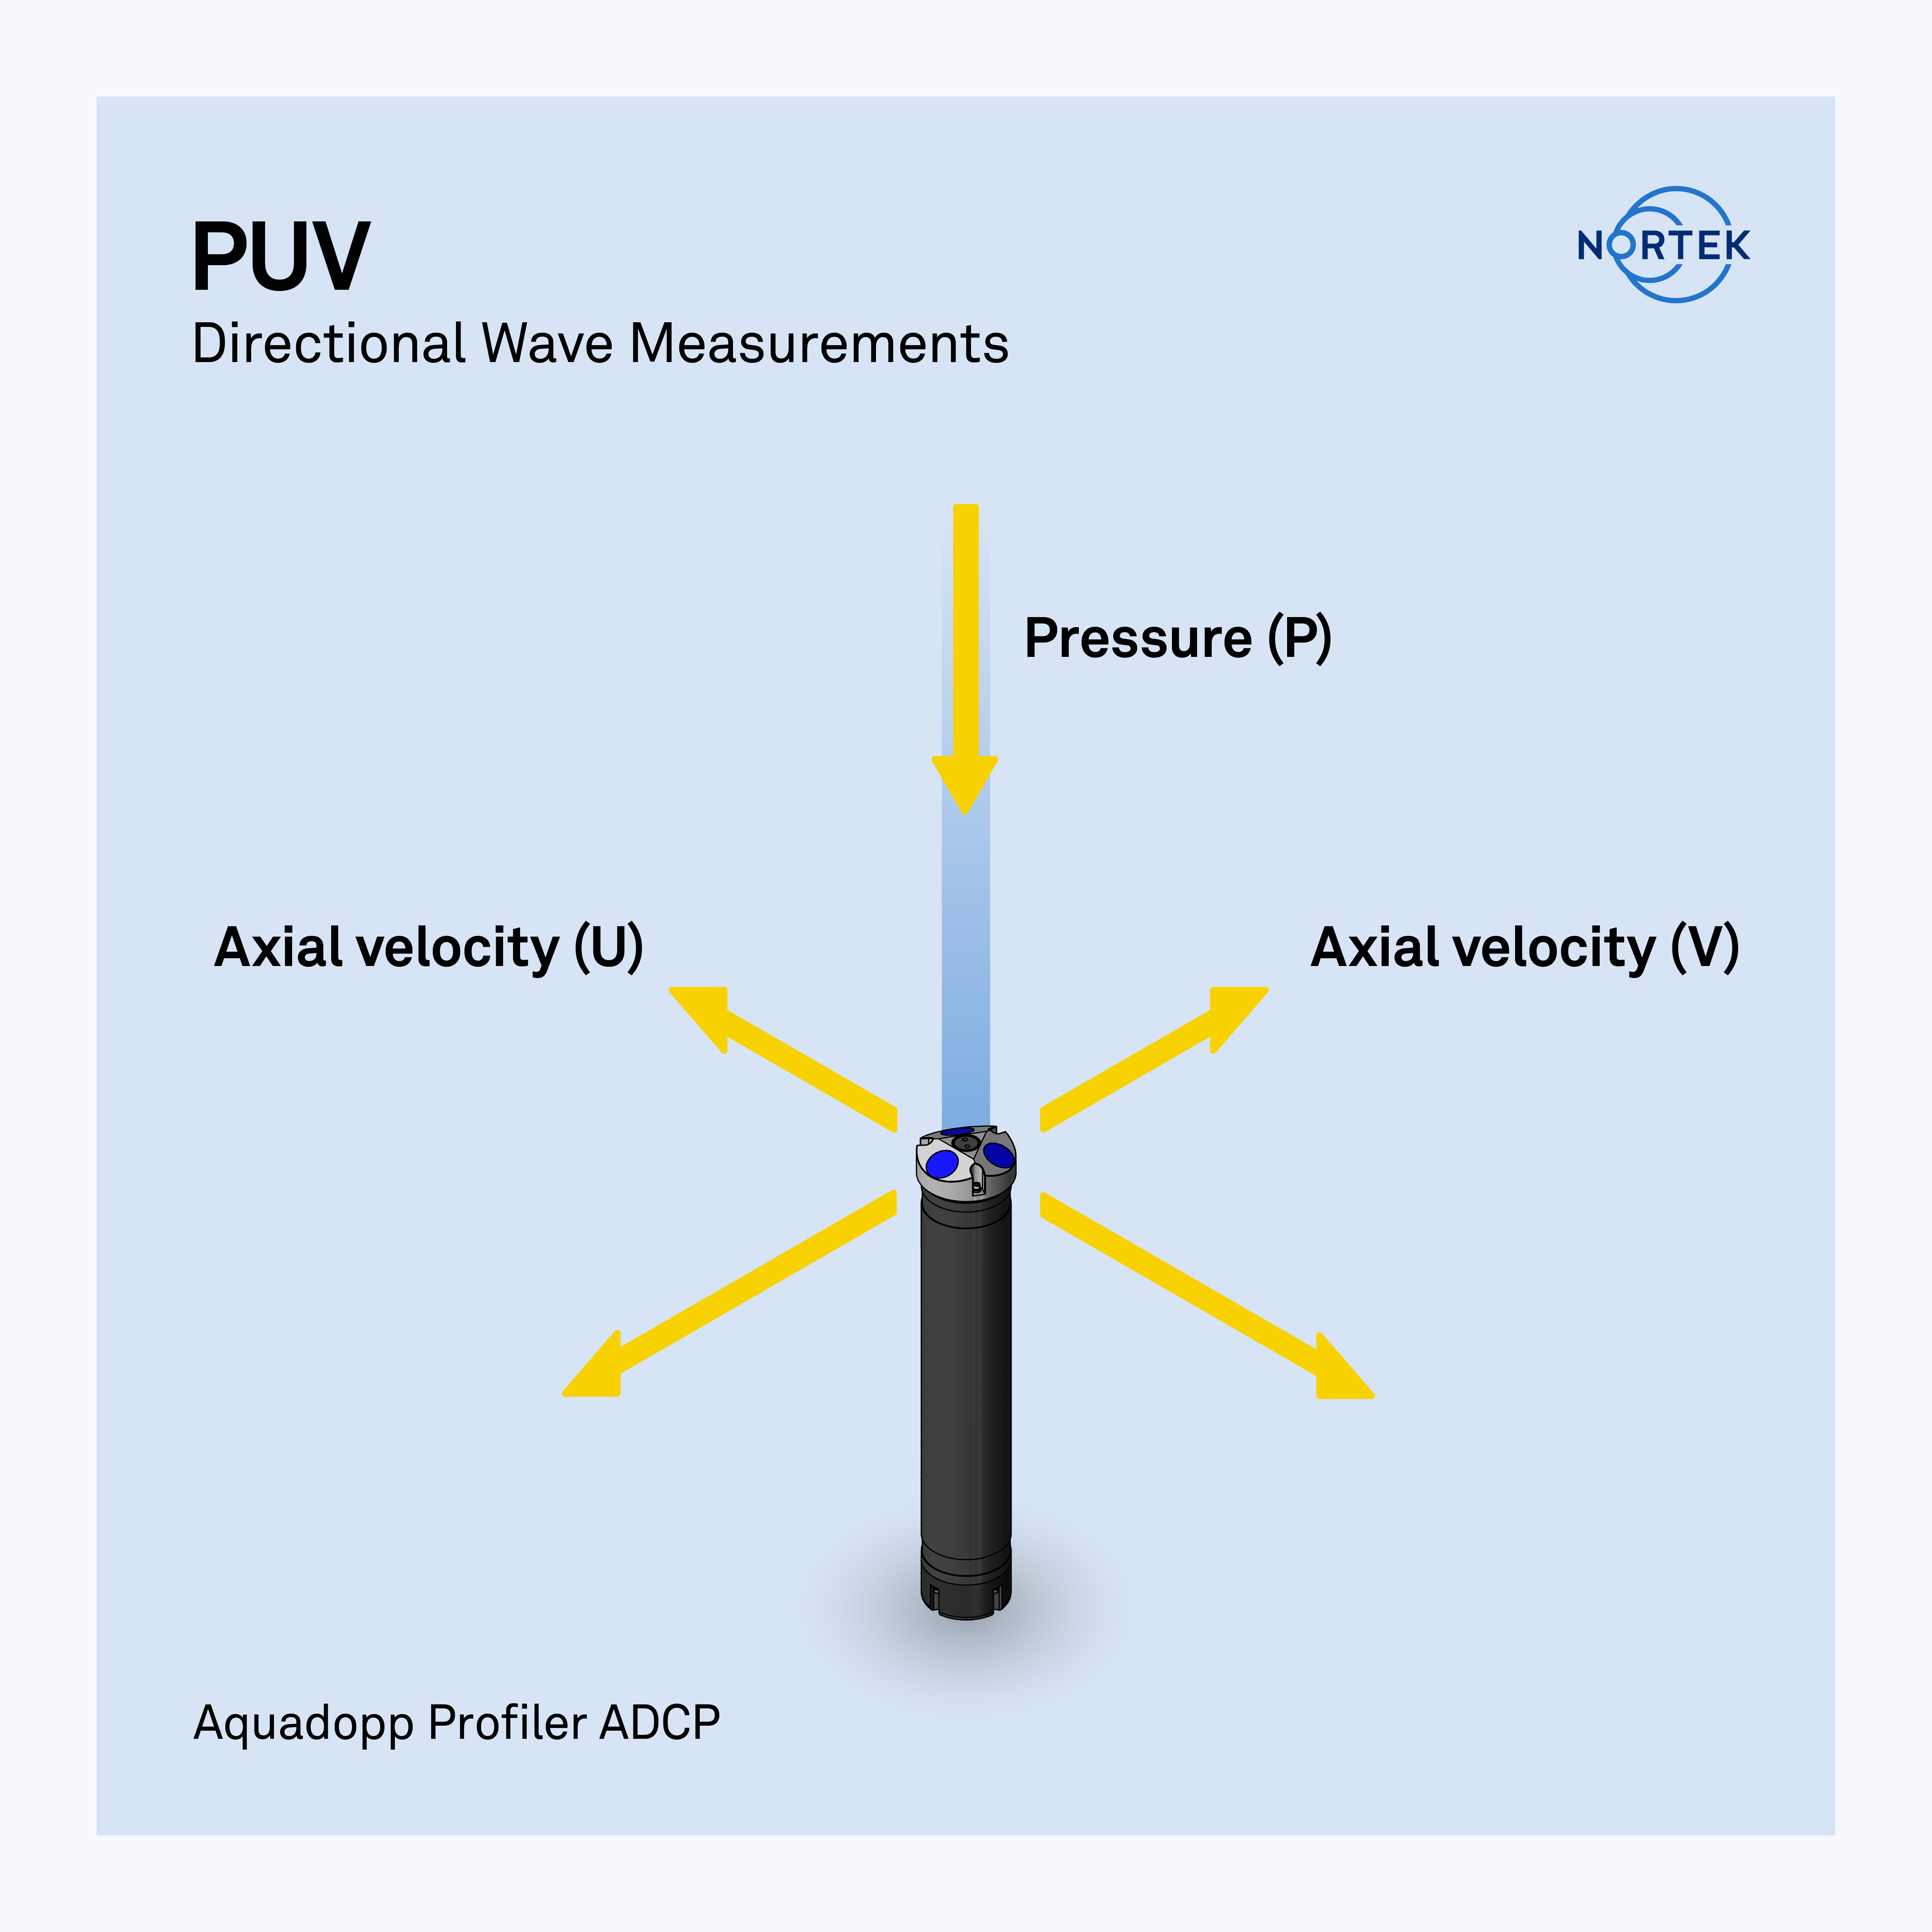 Nortek Aquadopp Profiler ADCP and the PUV method